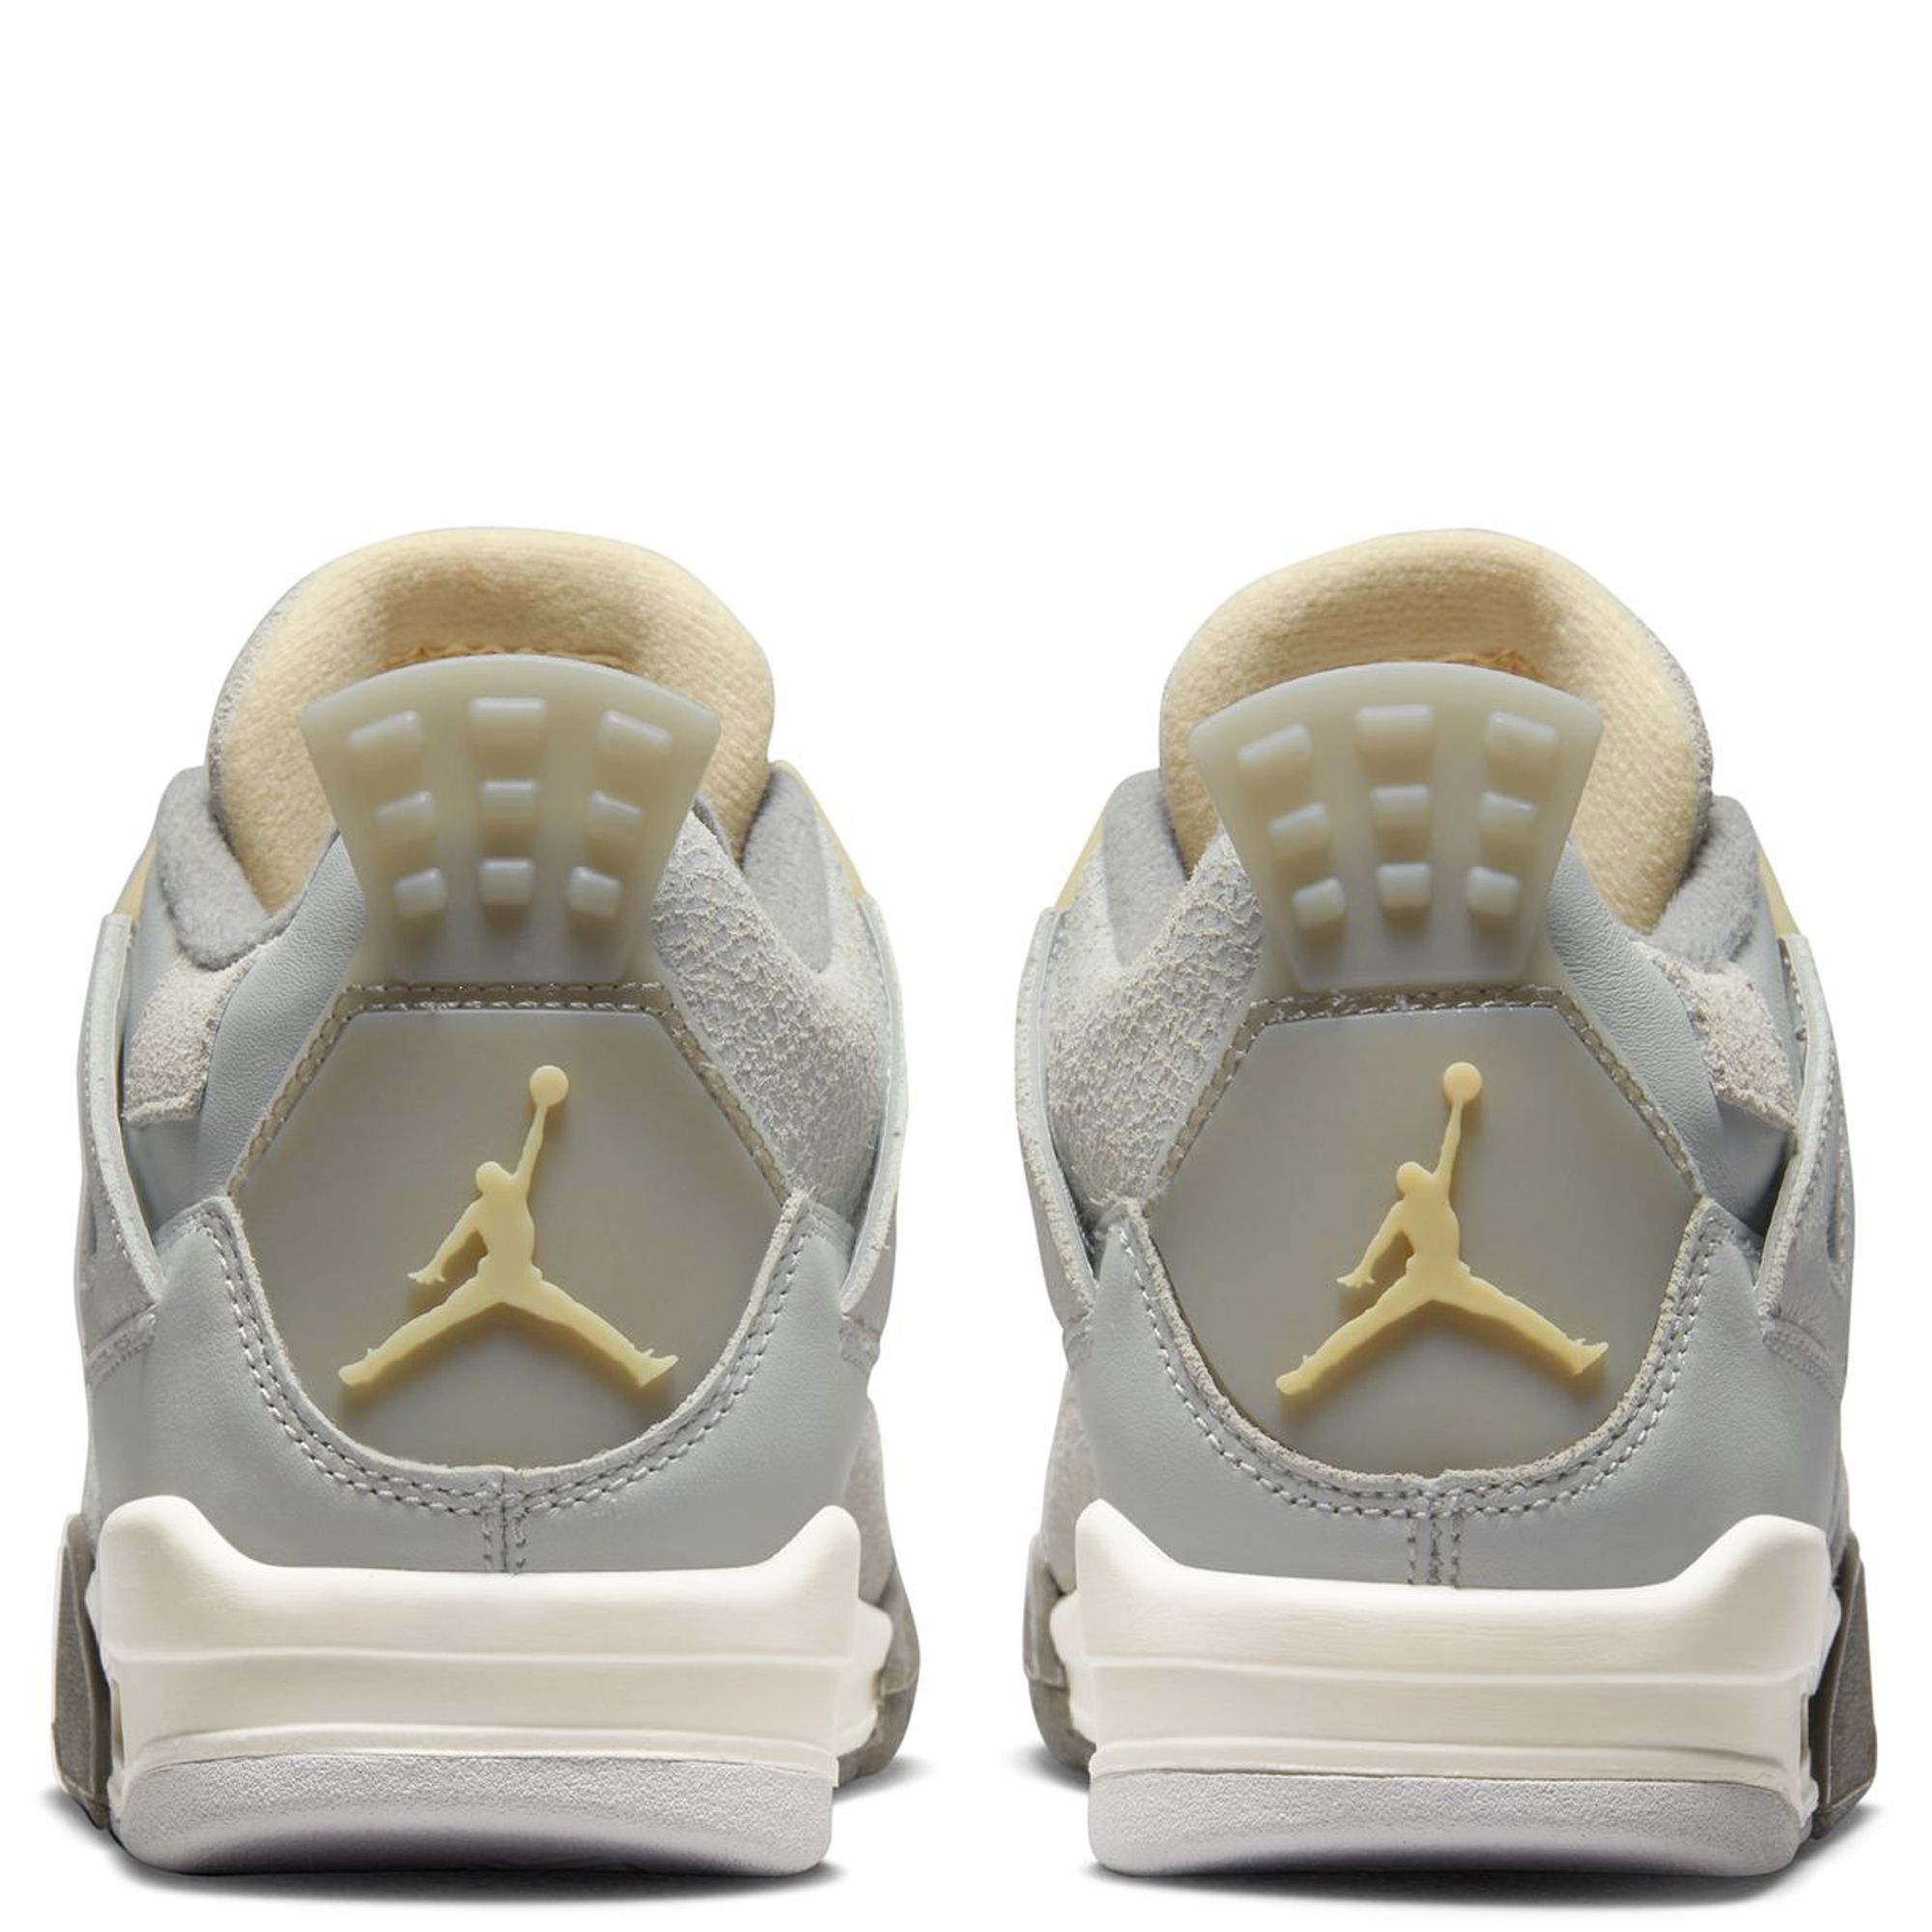 Air Jordan 4 “Mewtwo” custom by @andu.c 🧪 Would you cop this colorway?  #mewtwo #pokemon #jordan4 #customsneakers